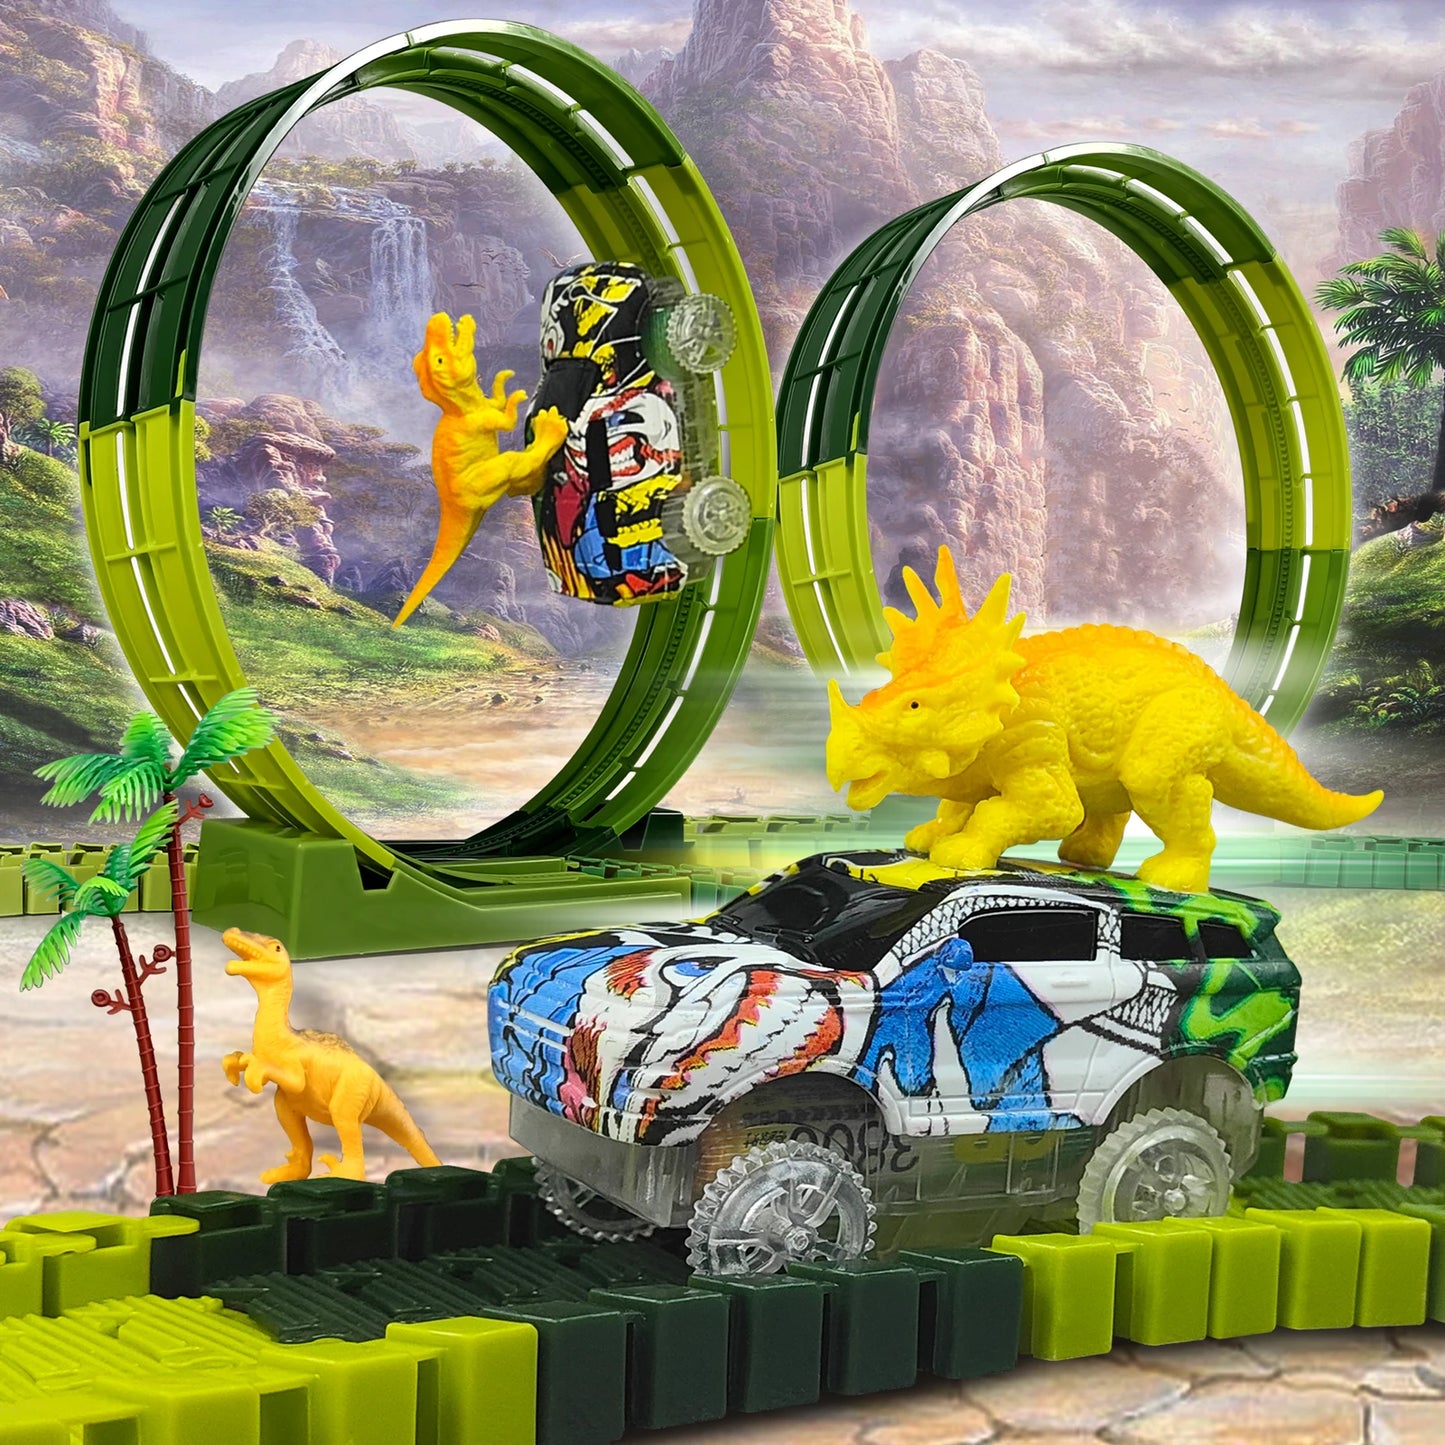 139-Piece Dinosaur World Climbing Track Toy Set - Flexible Road Race Playset with Dinosaur Cars for Boys